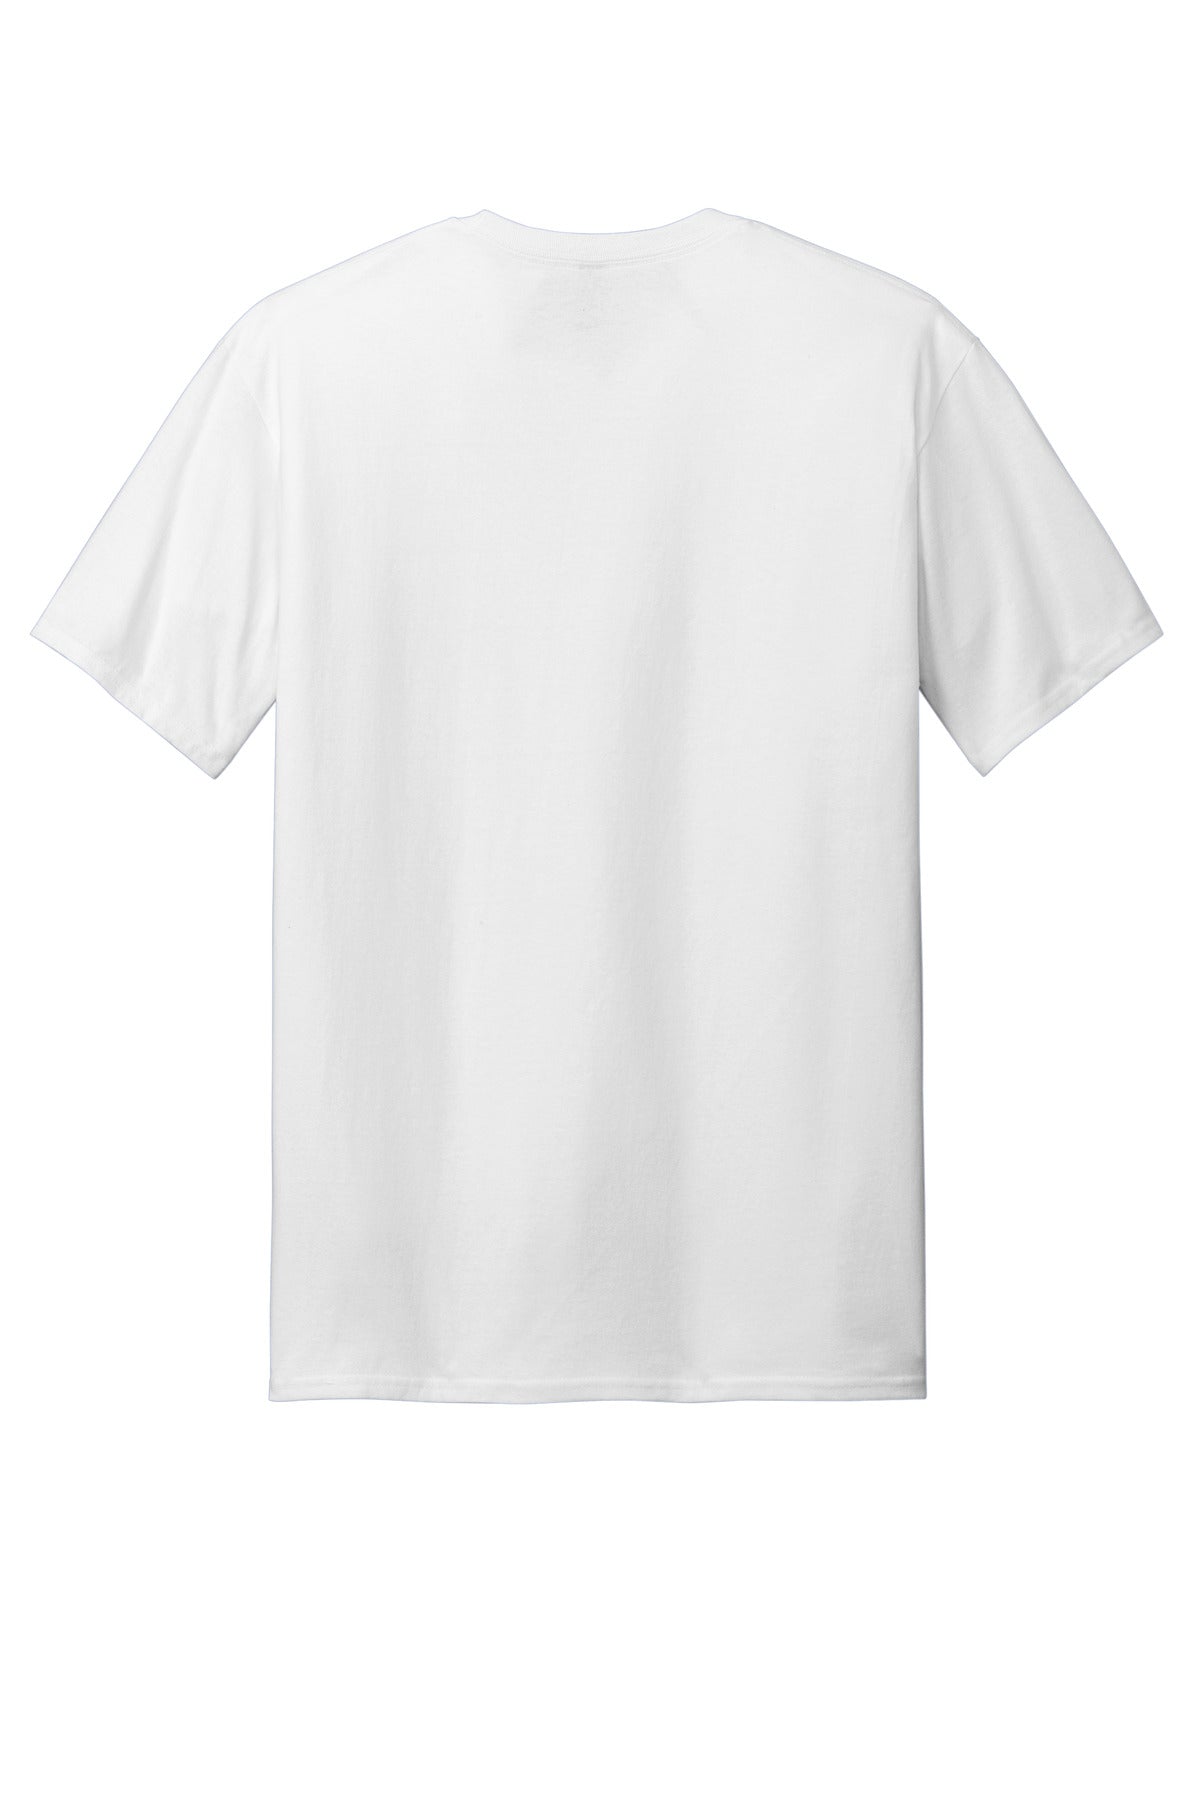 Gildan Tall 100% US Cotton T-Shirt 2000T - BT Imprintables Shirts